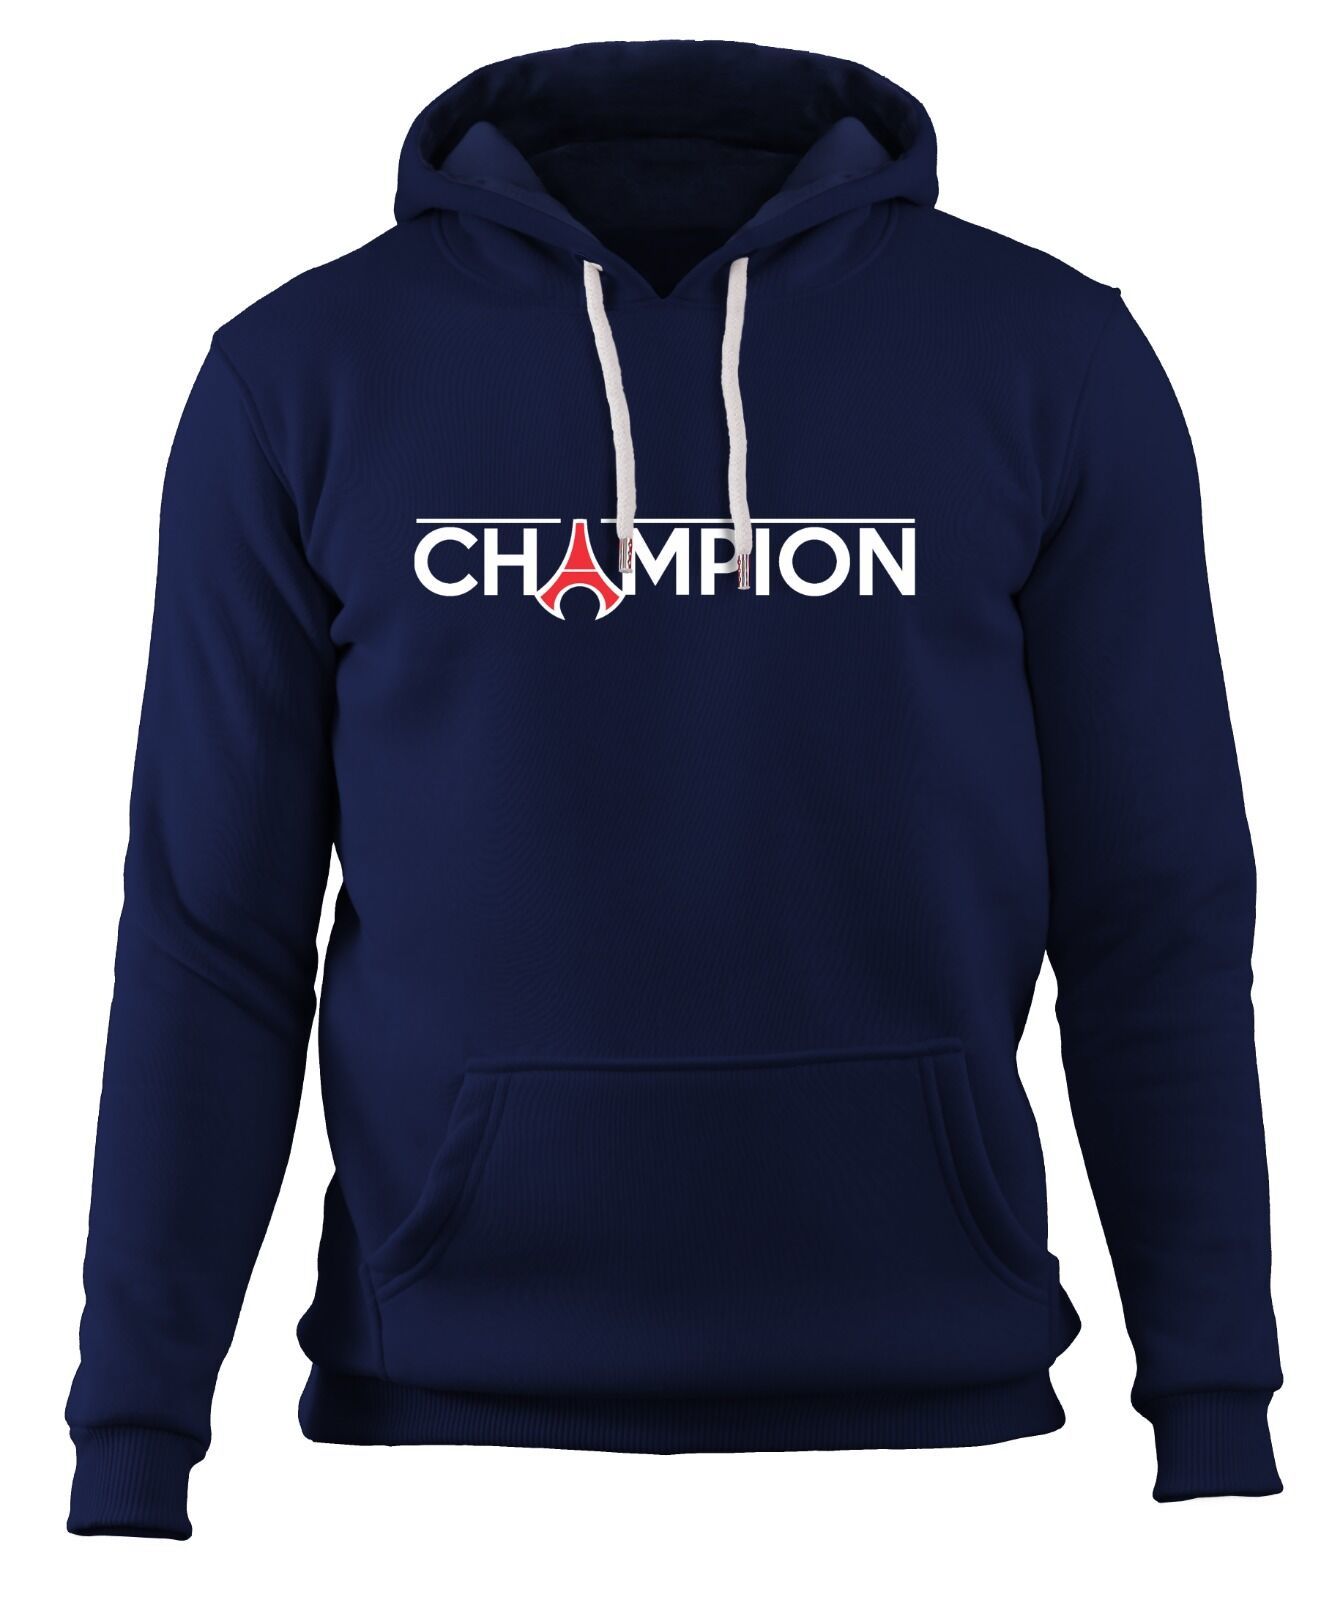 Paris Saint Germain - PSG Champion Sweatshirt